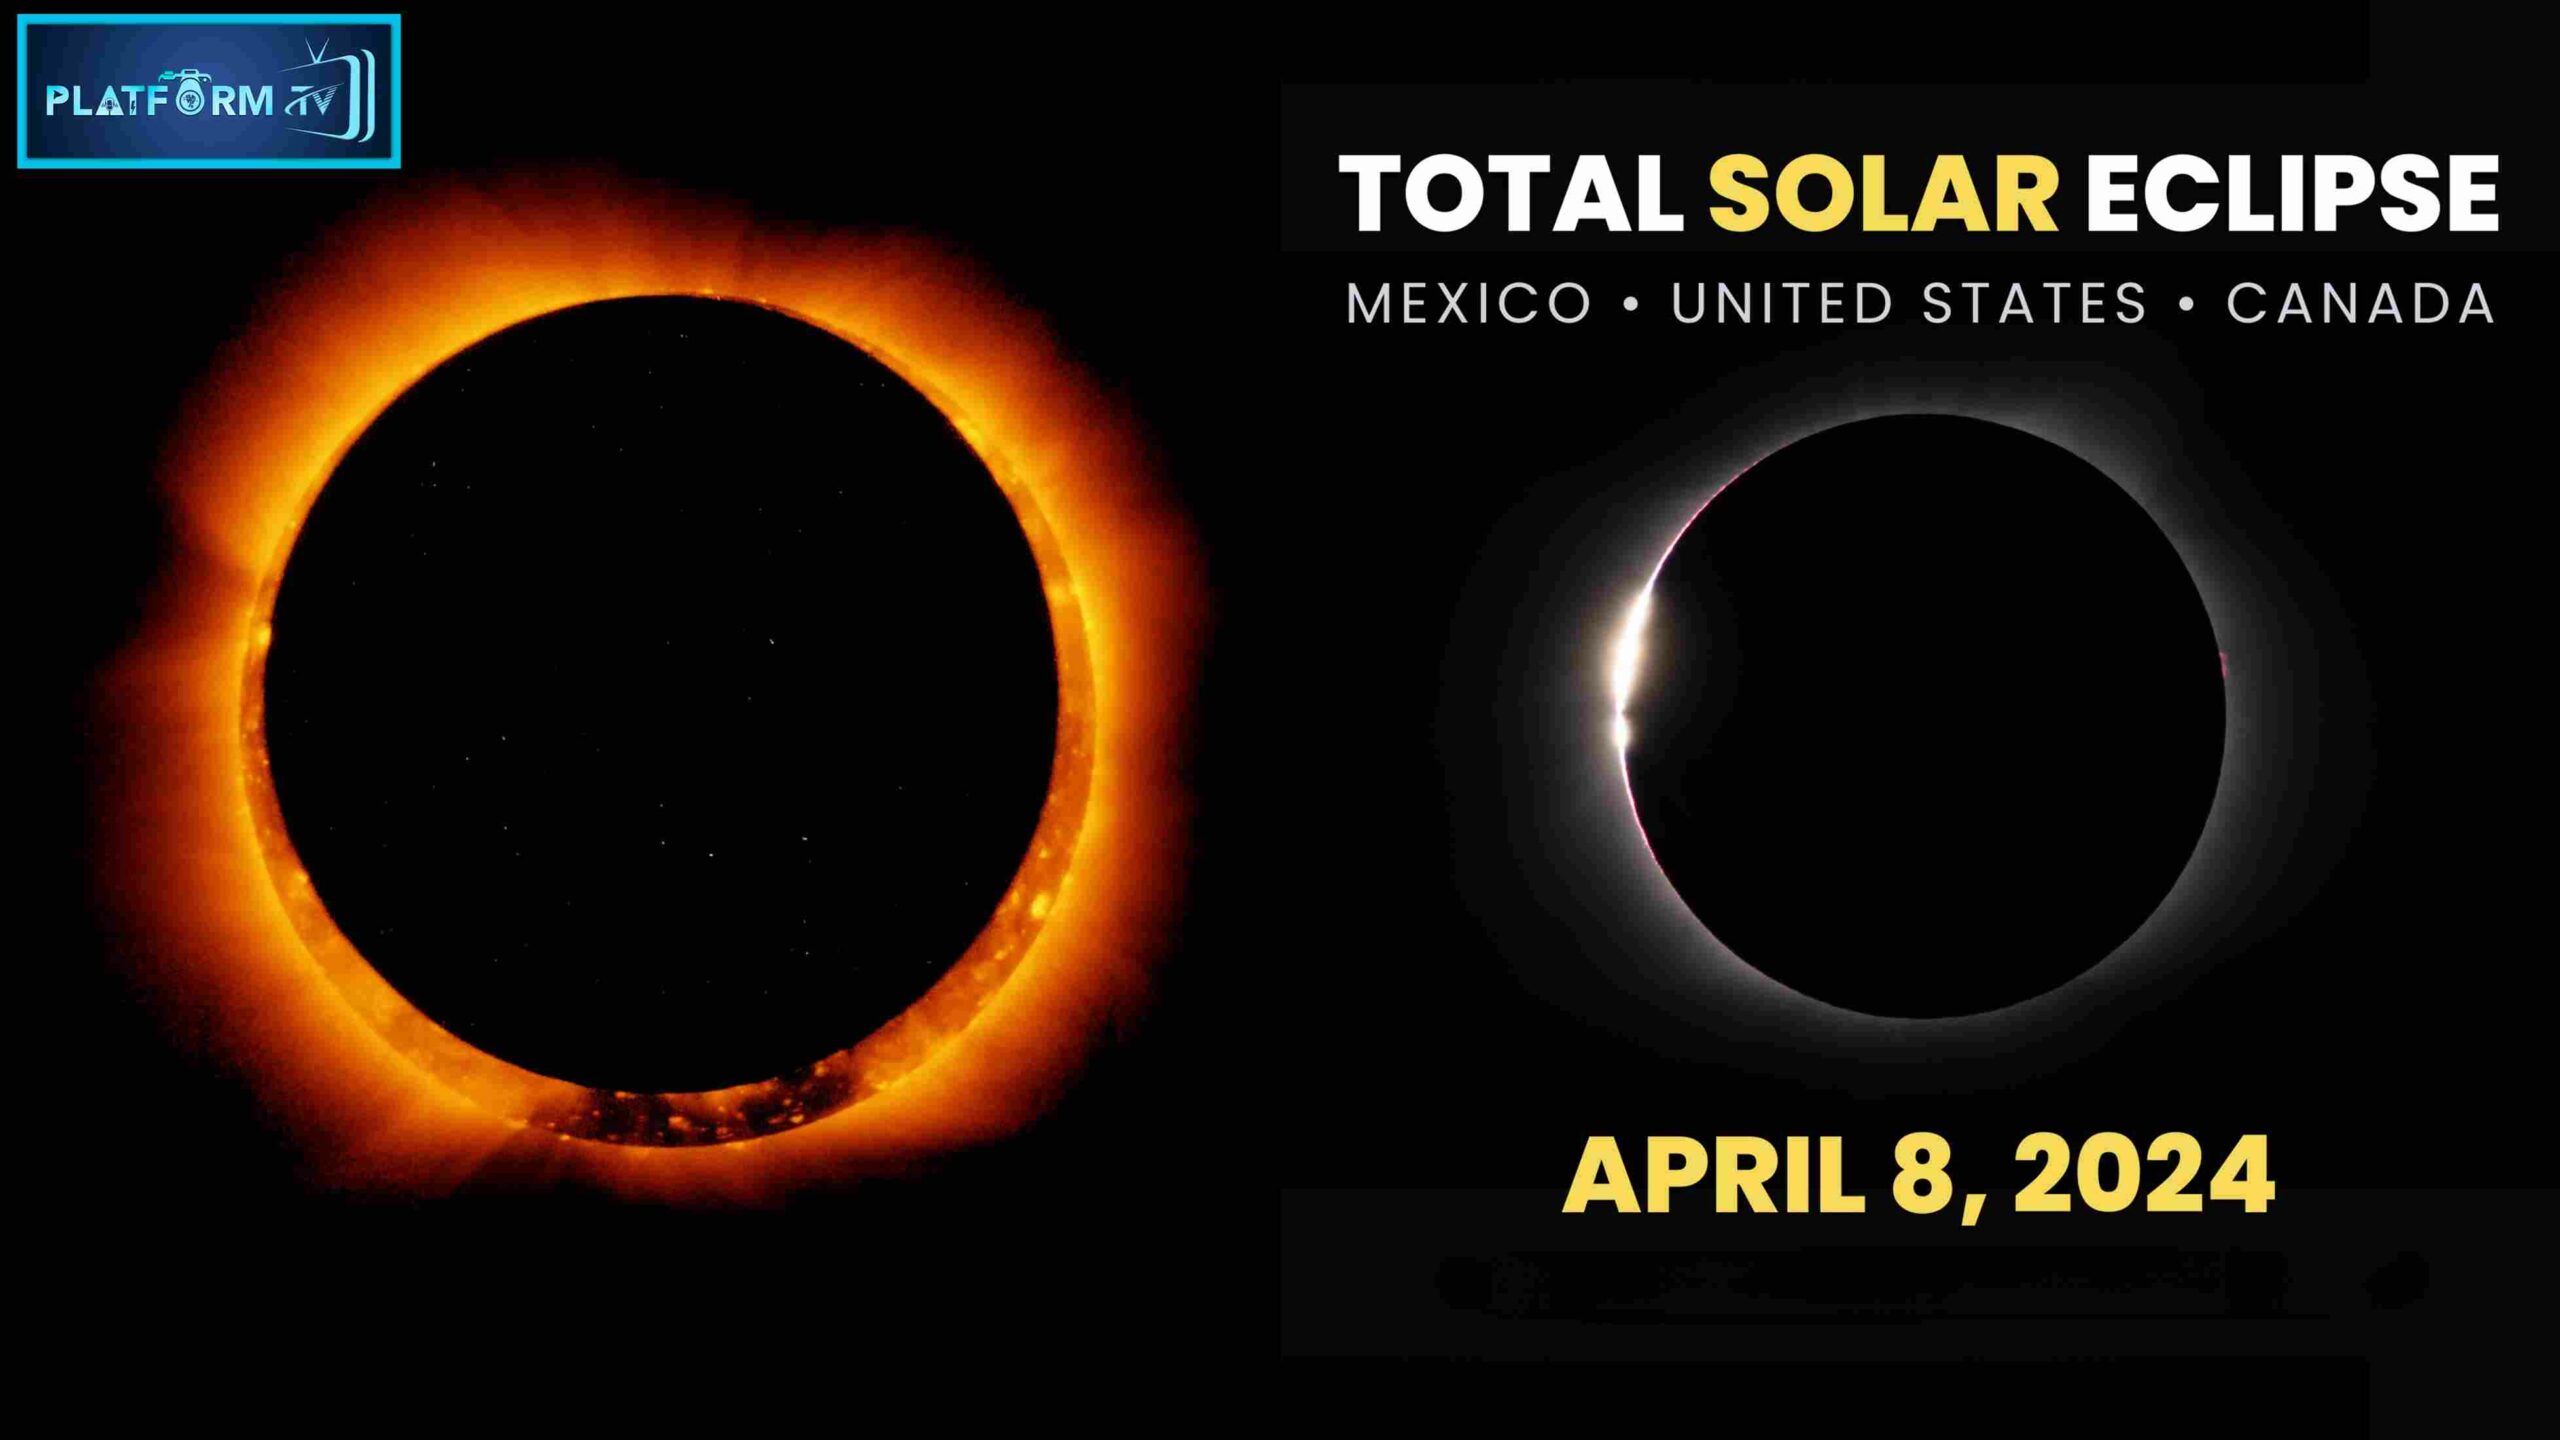 A Rare Solar Eclipse on April 8, 2024 - Platform Tamil